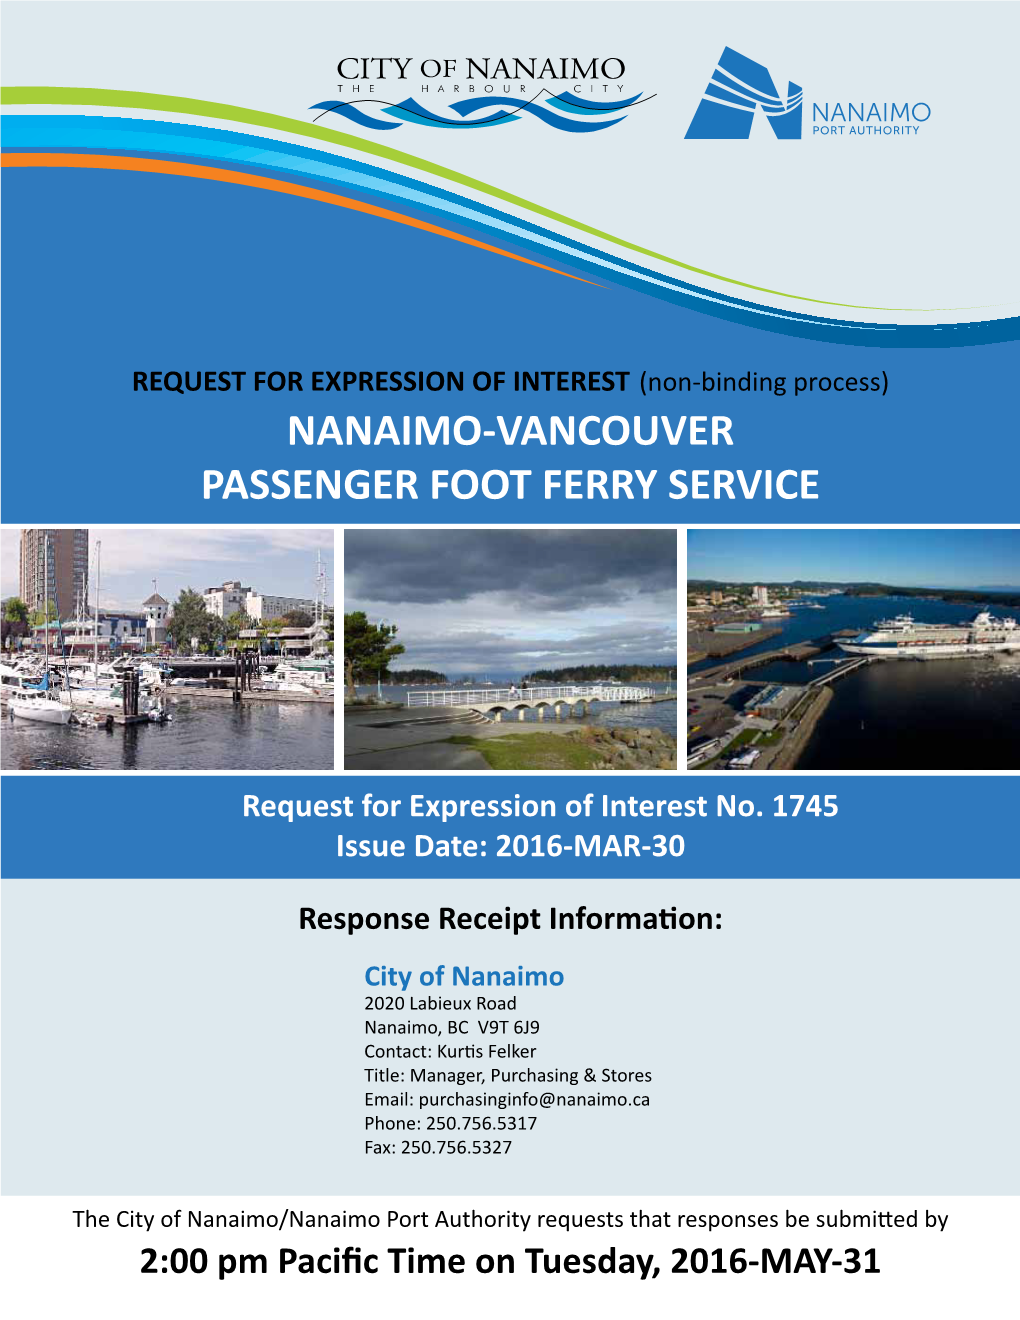 Nanaimo-Vancouver Passenger Foot Ferry Service